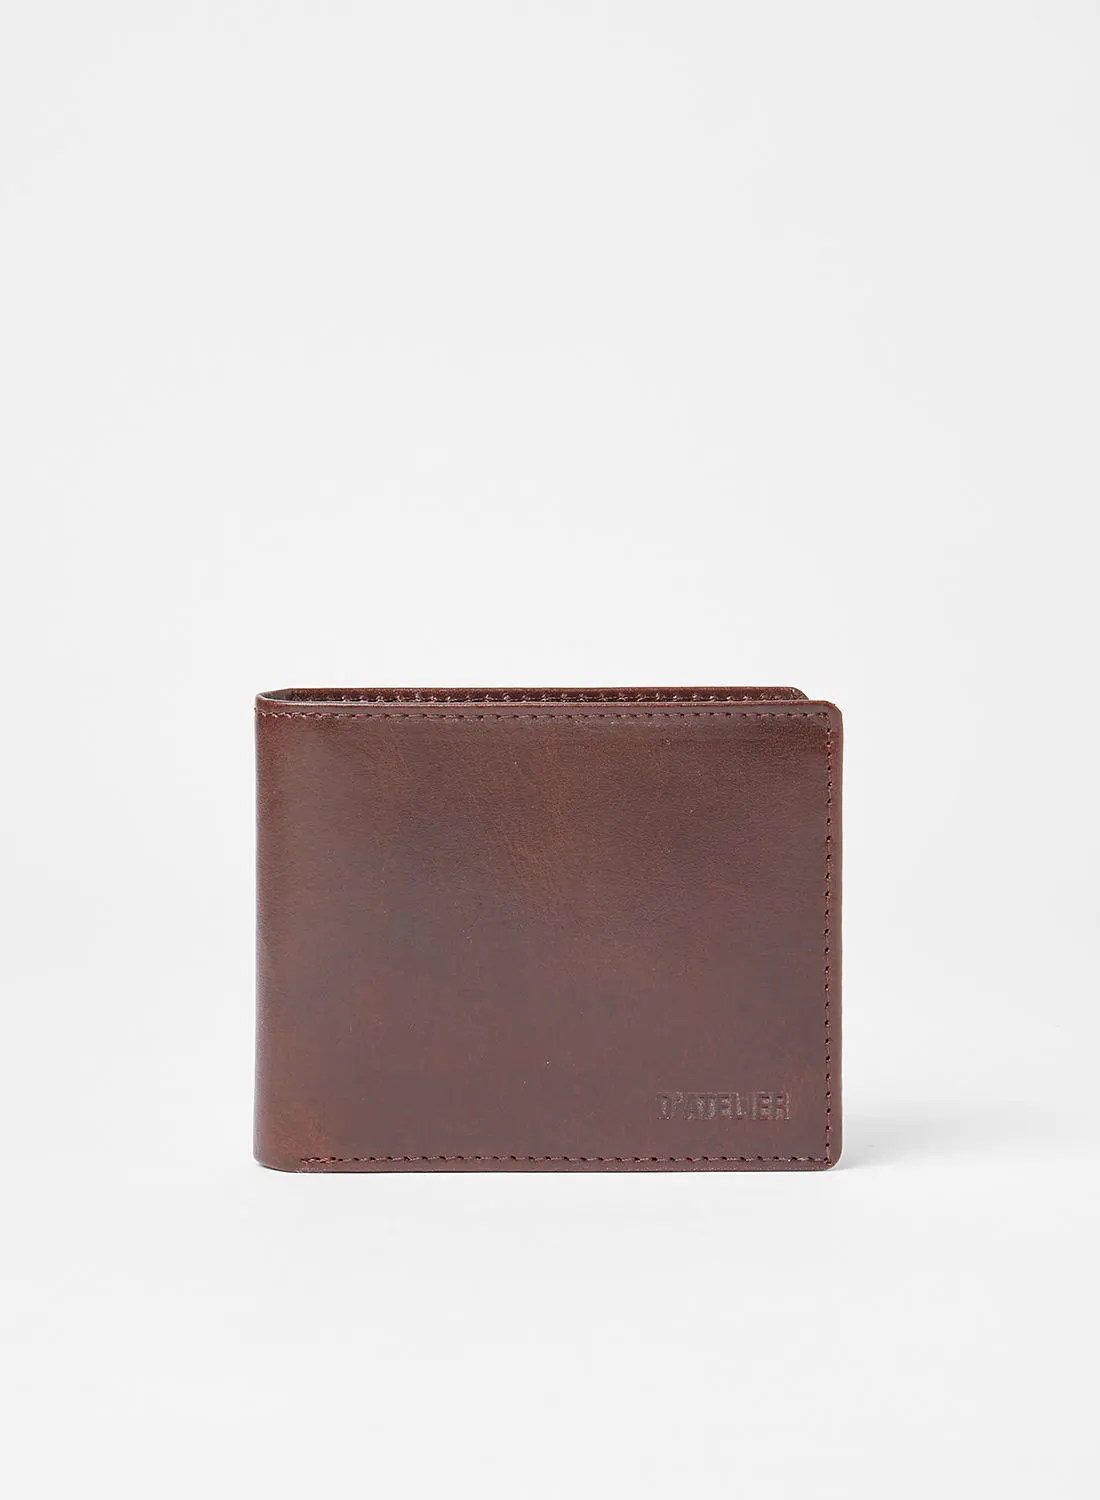 Sivvi x D'Atelier Leather Bi-Fold Wallet Brown